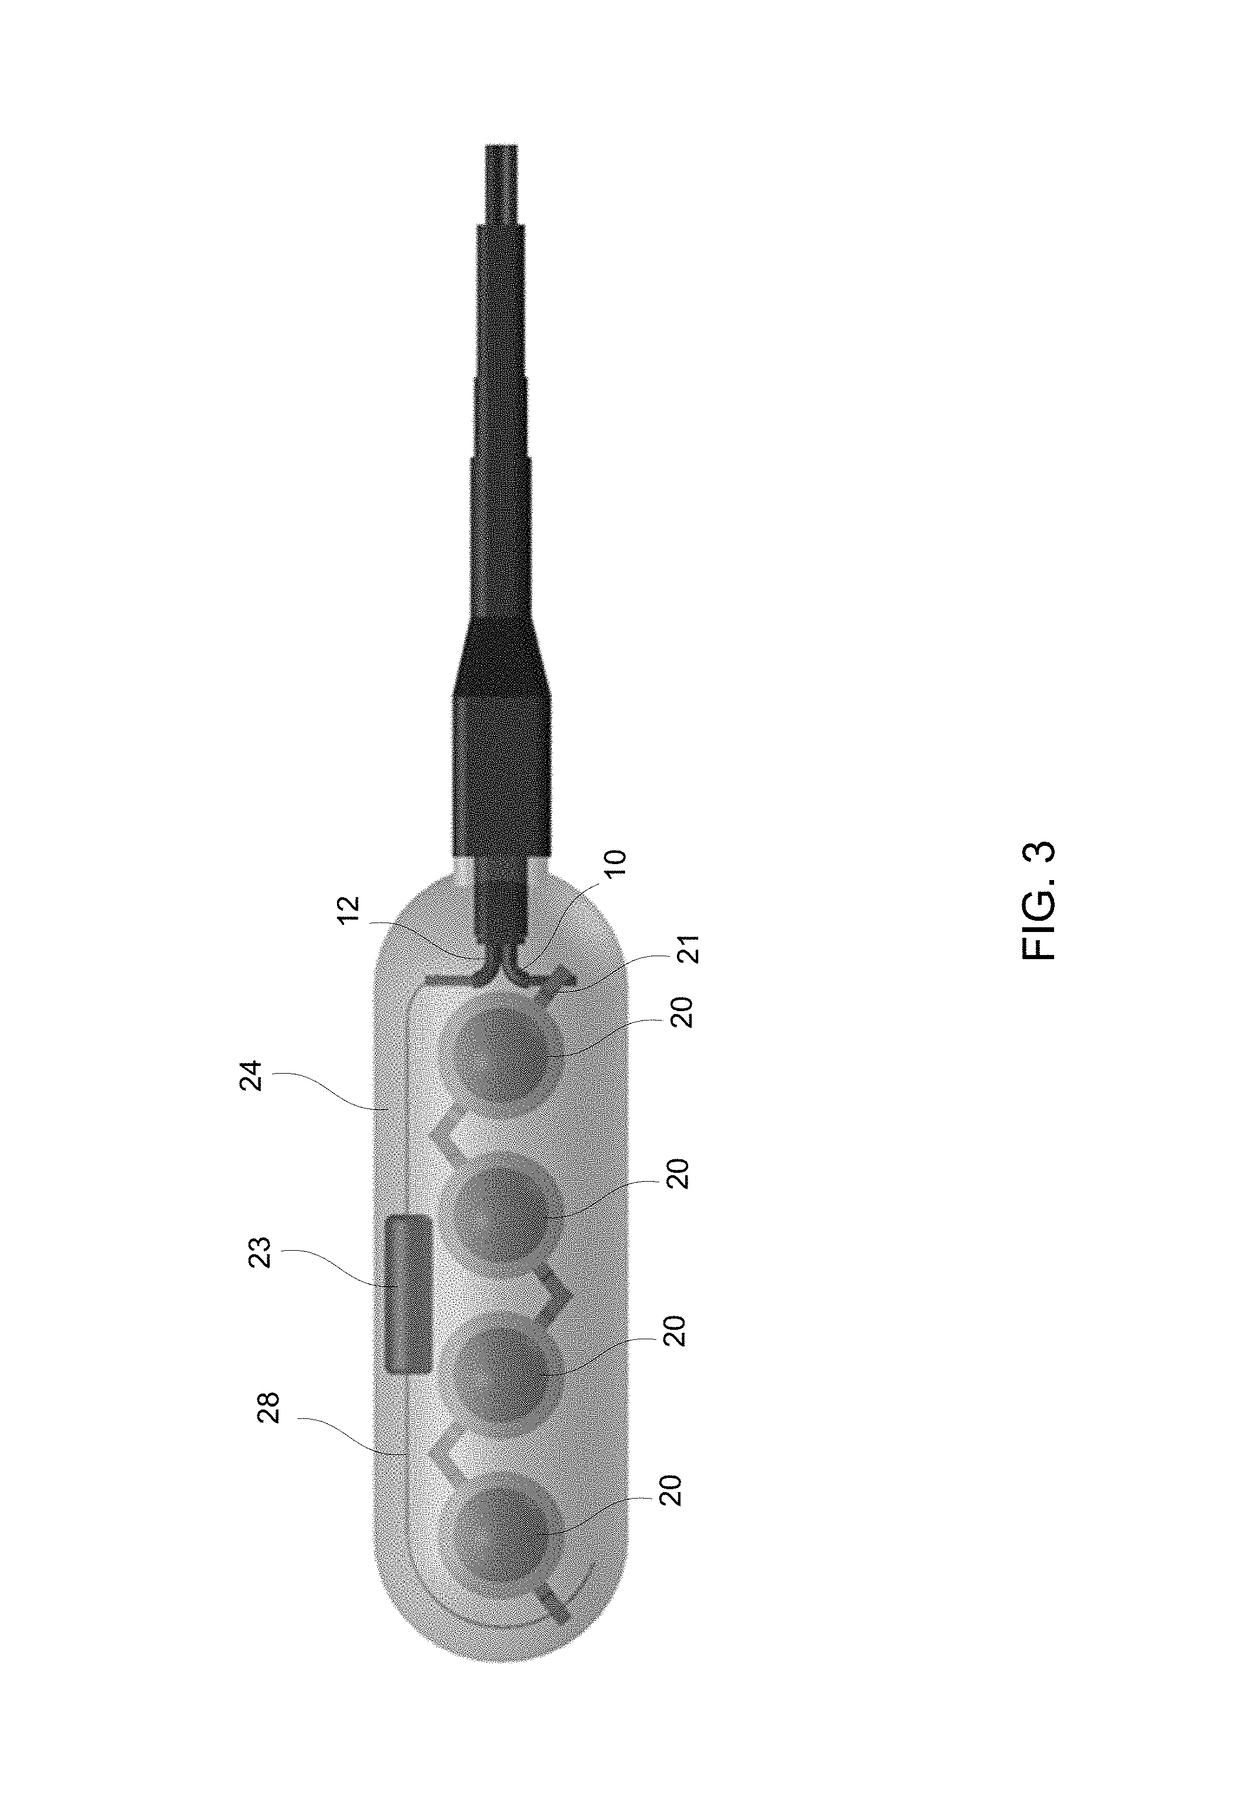 Magnetic light emitting diode (LED) lighting system